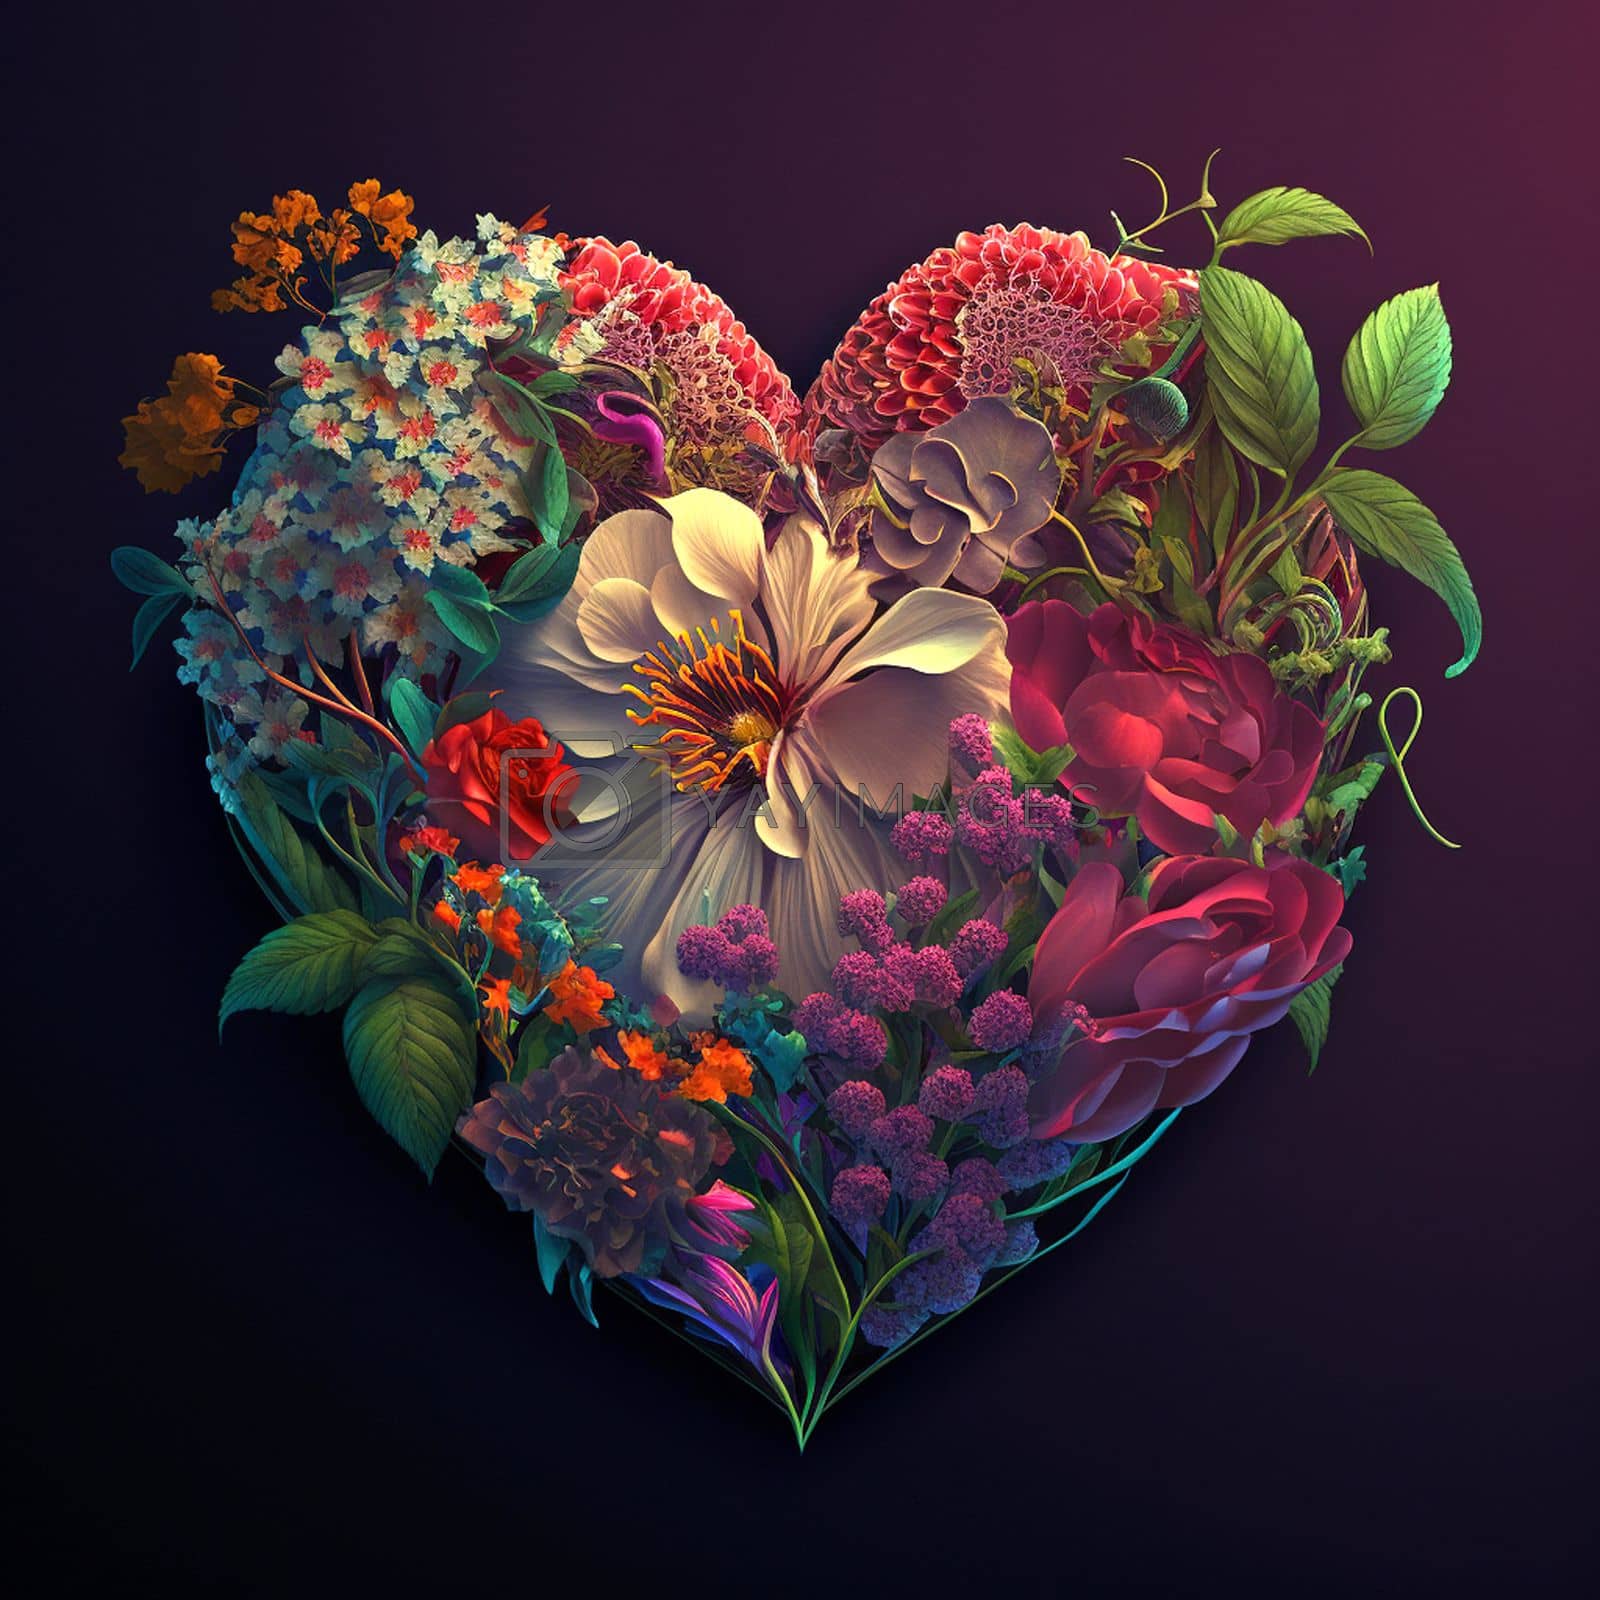 Floral romantic heart and flowers. Vintage love illustration on dark background. Digital generaterd.